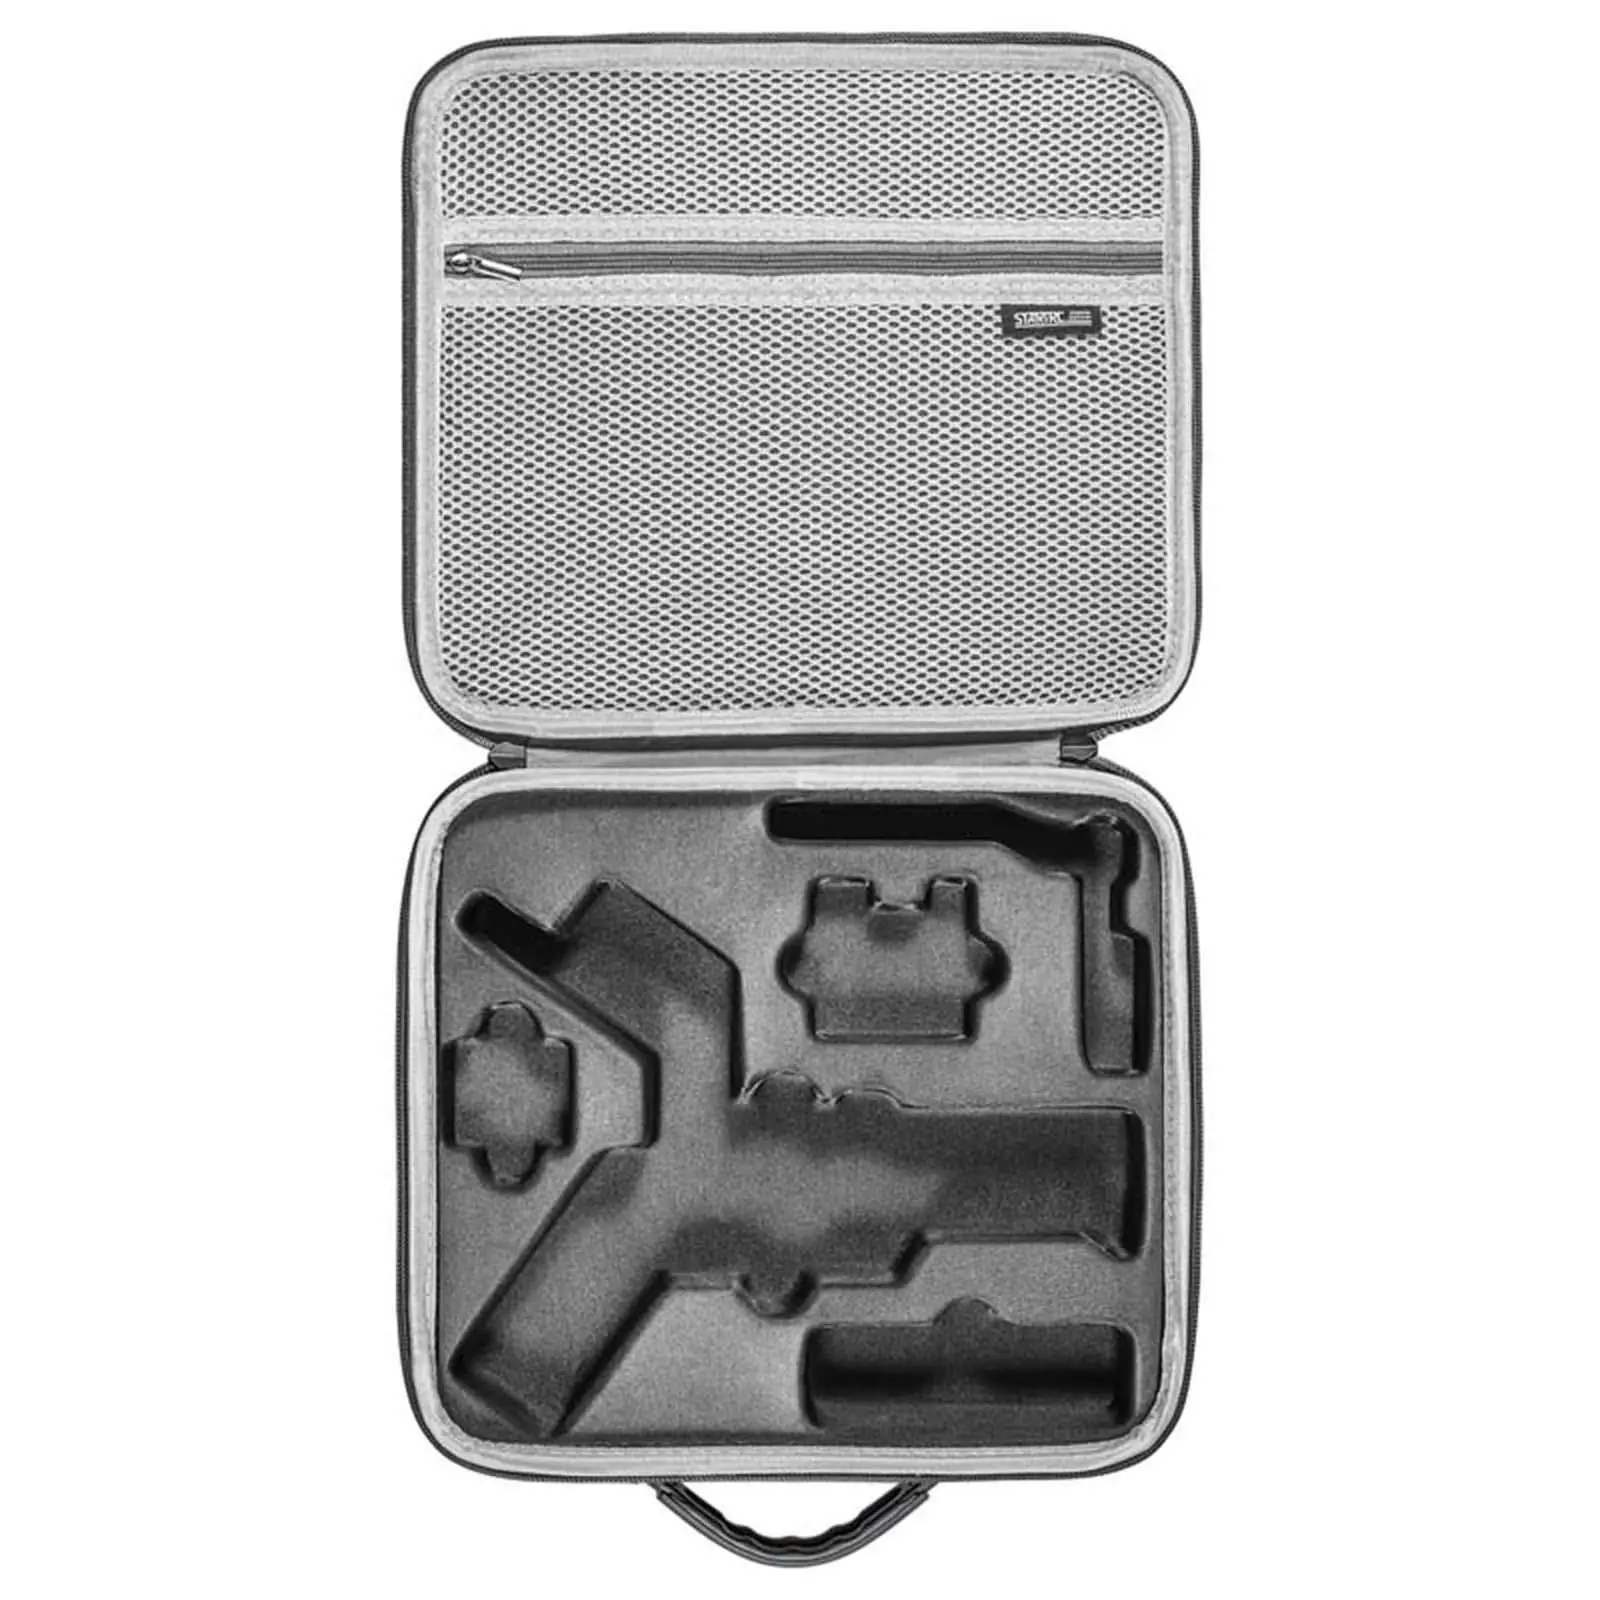 Carrying Case for Ronin RS 3 Mini Protective Case Adjustable Strap Two Way Zipper Shoulder Bag Handbag Travel